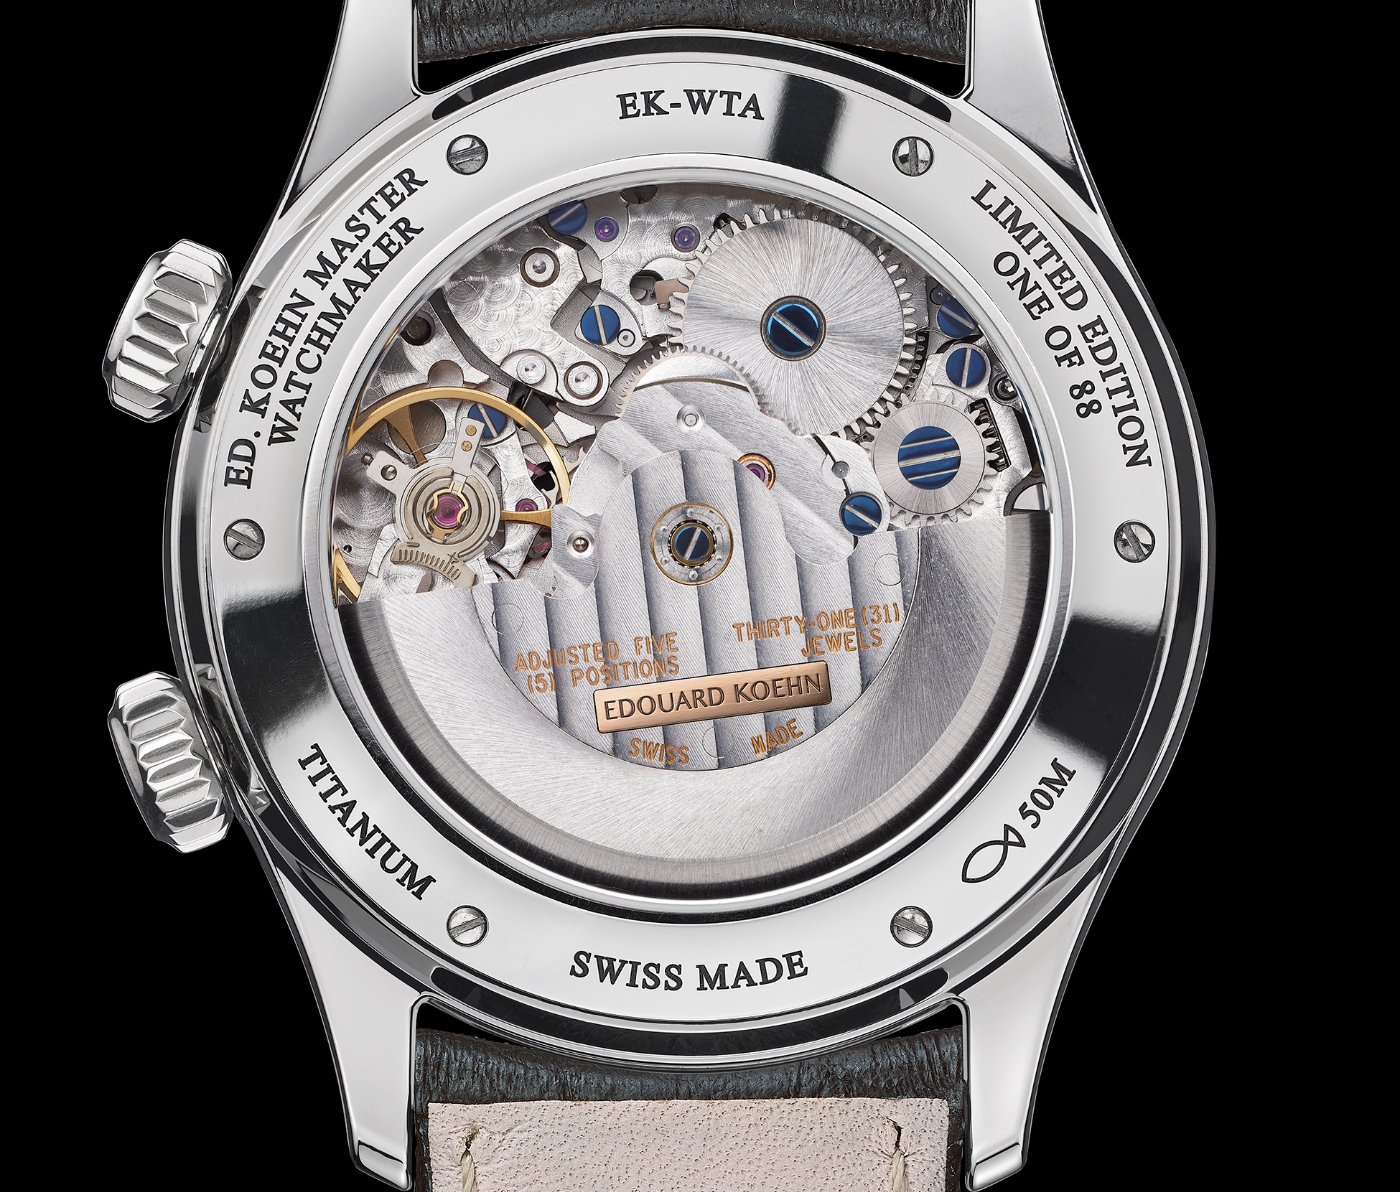 Introducing Edouard Koehn's “World Heritage“ timepiece